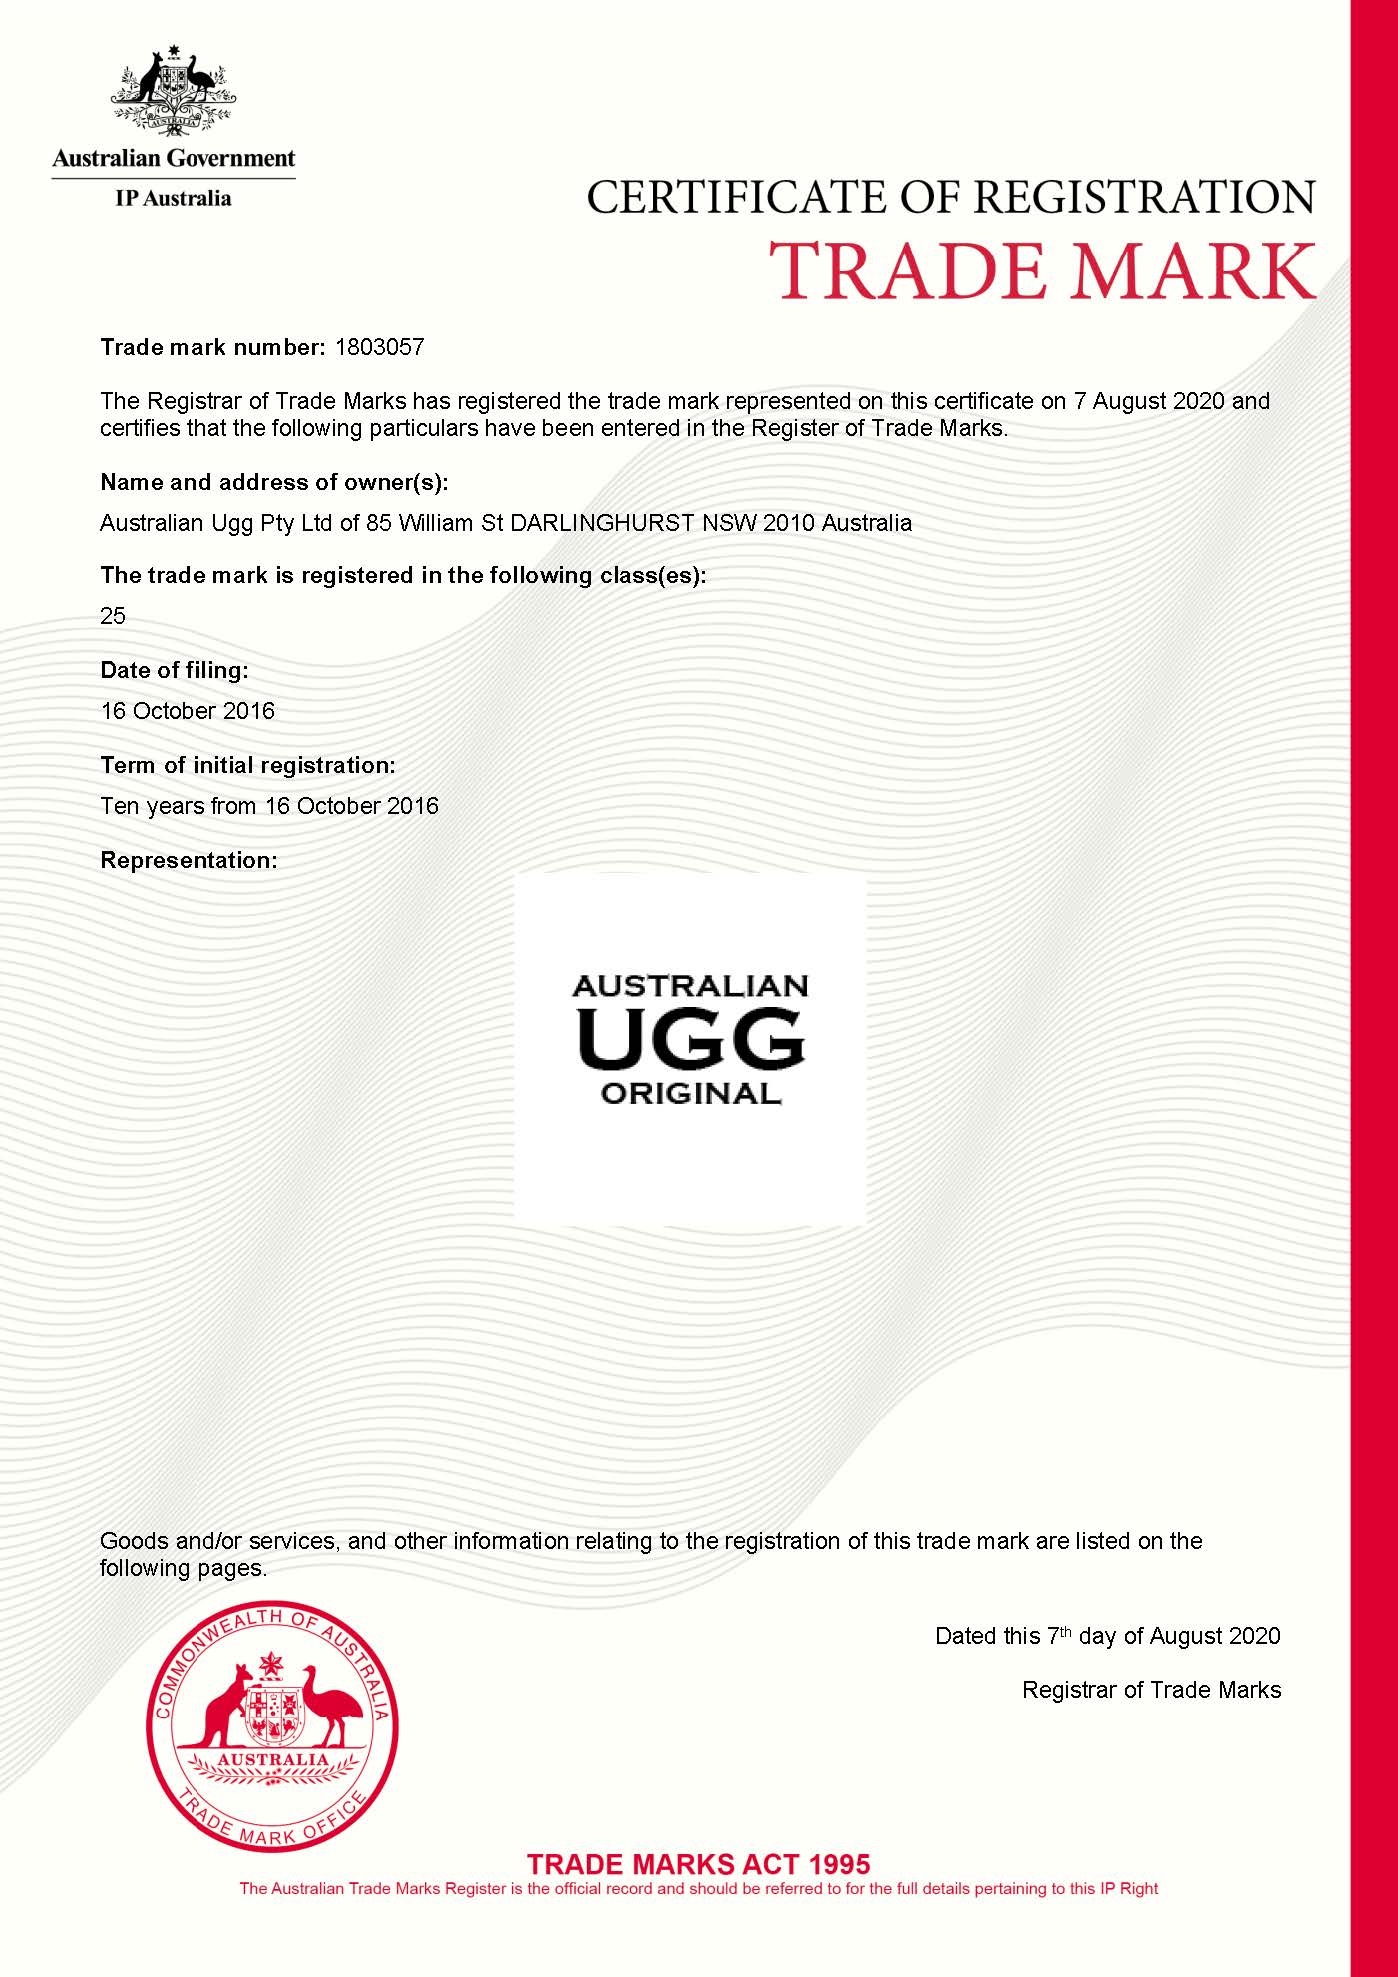 AUSTRALIAN UGG ORIGINAL Trade Mark Certificate 1803057